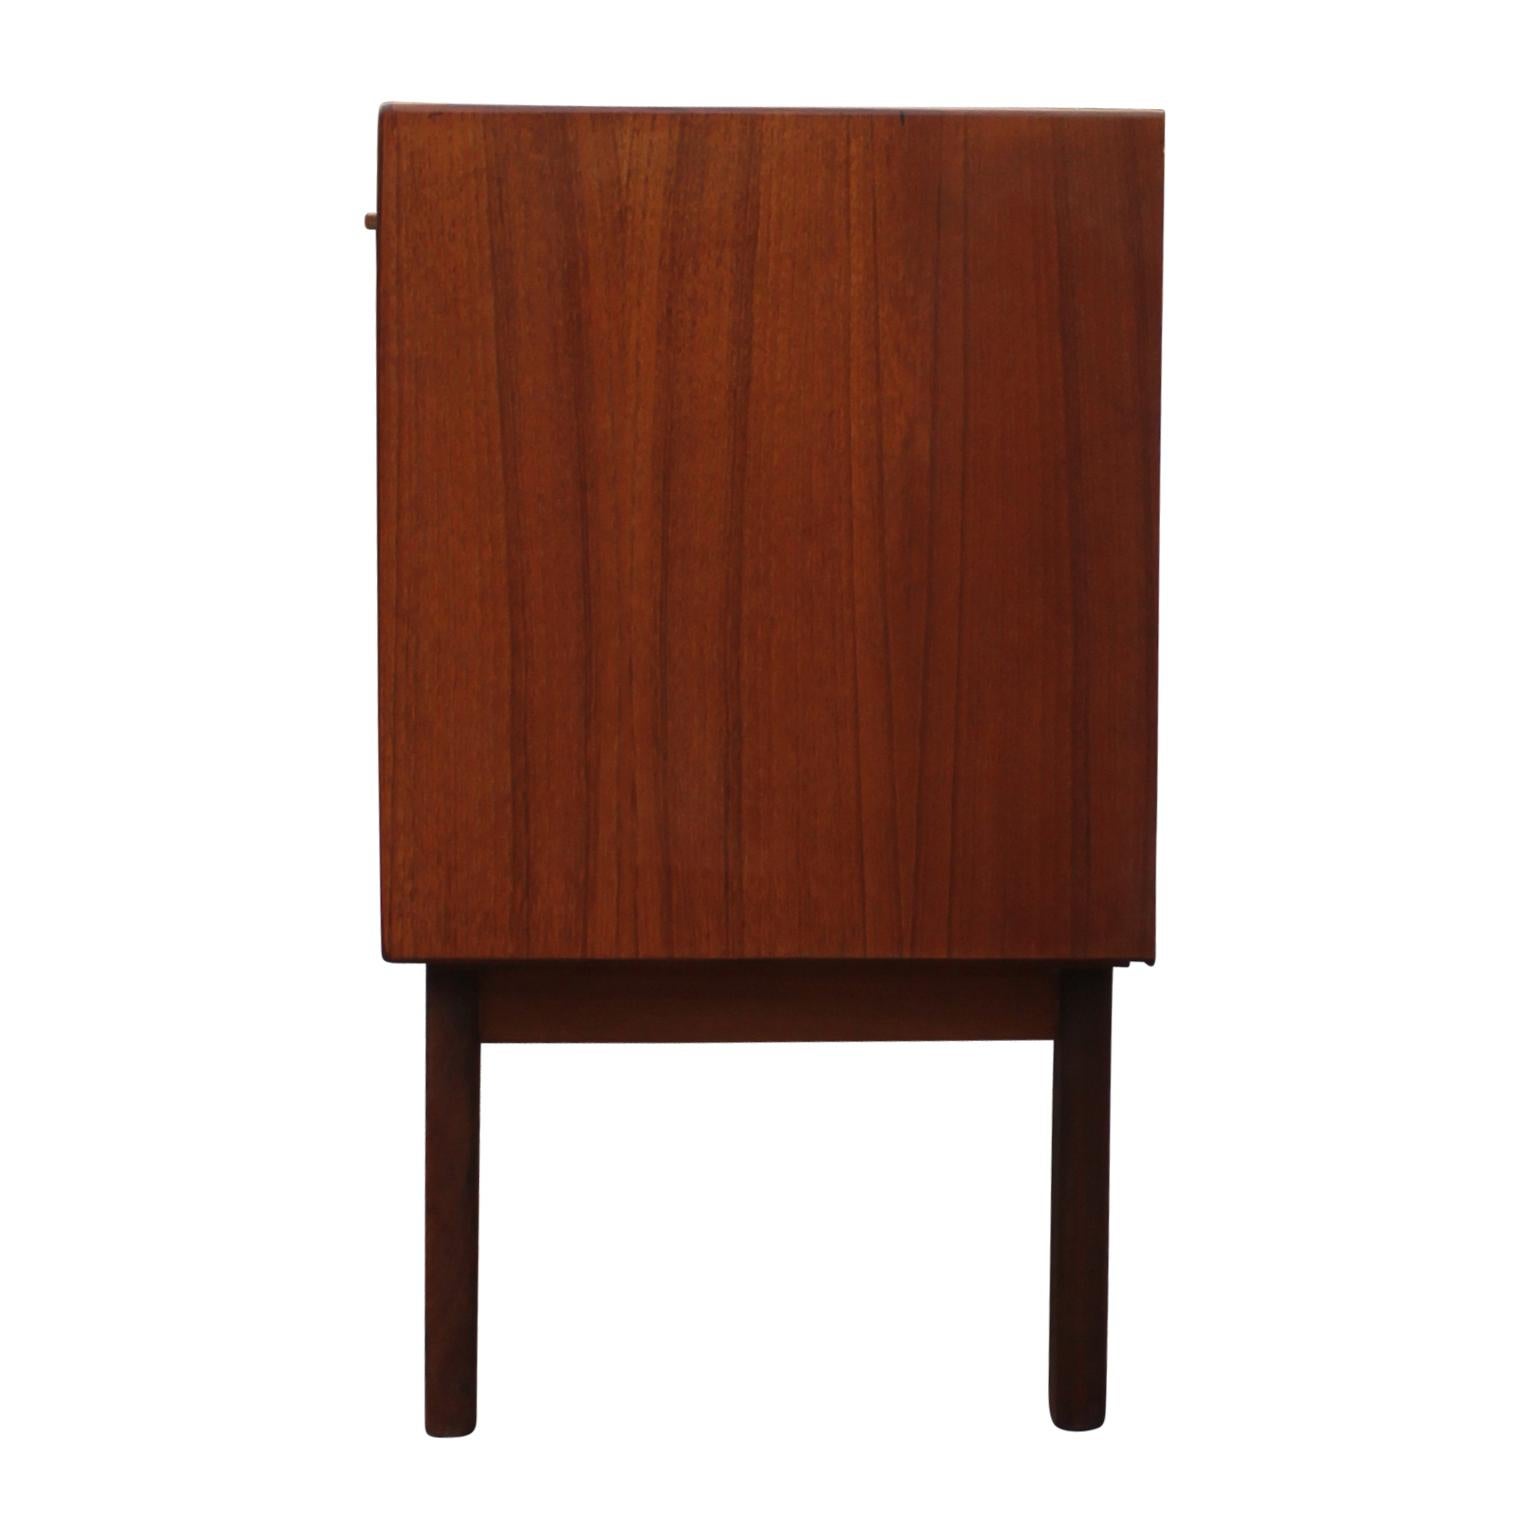 Mid-20th Century Modern Restored G Plan Furniture Walnut Finish Teak Credenza or Sideboard